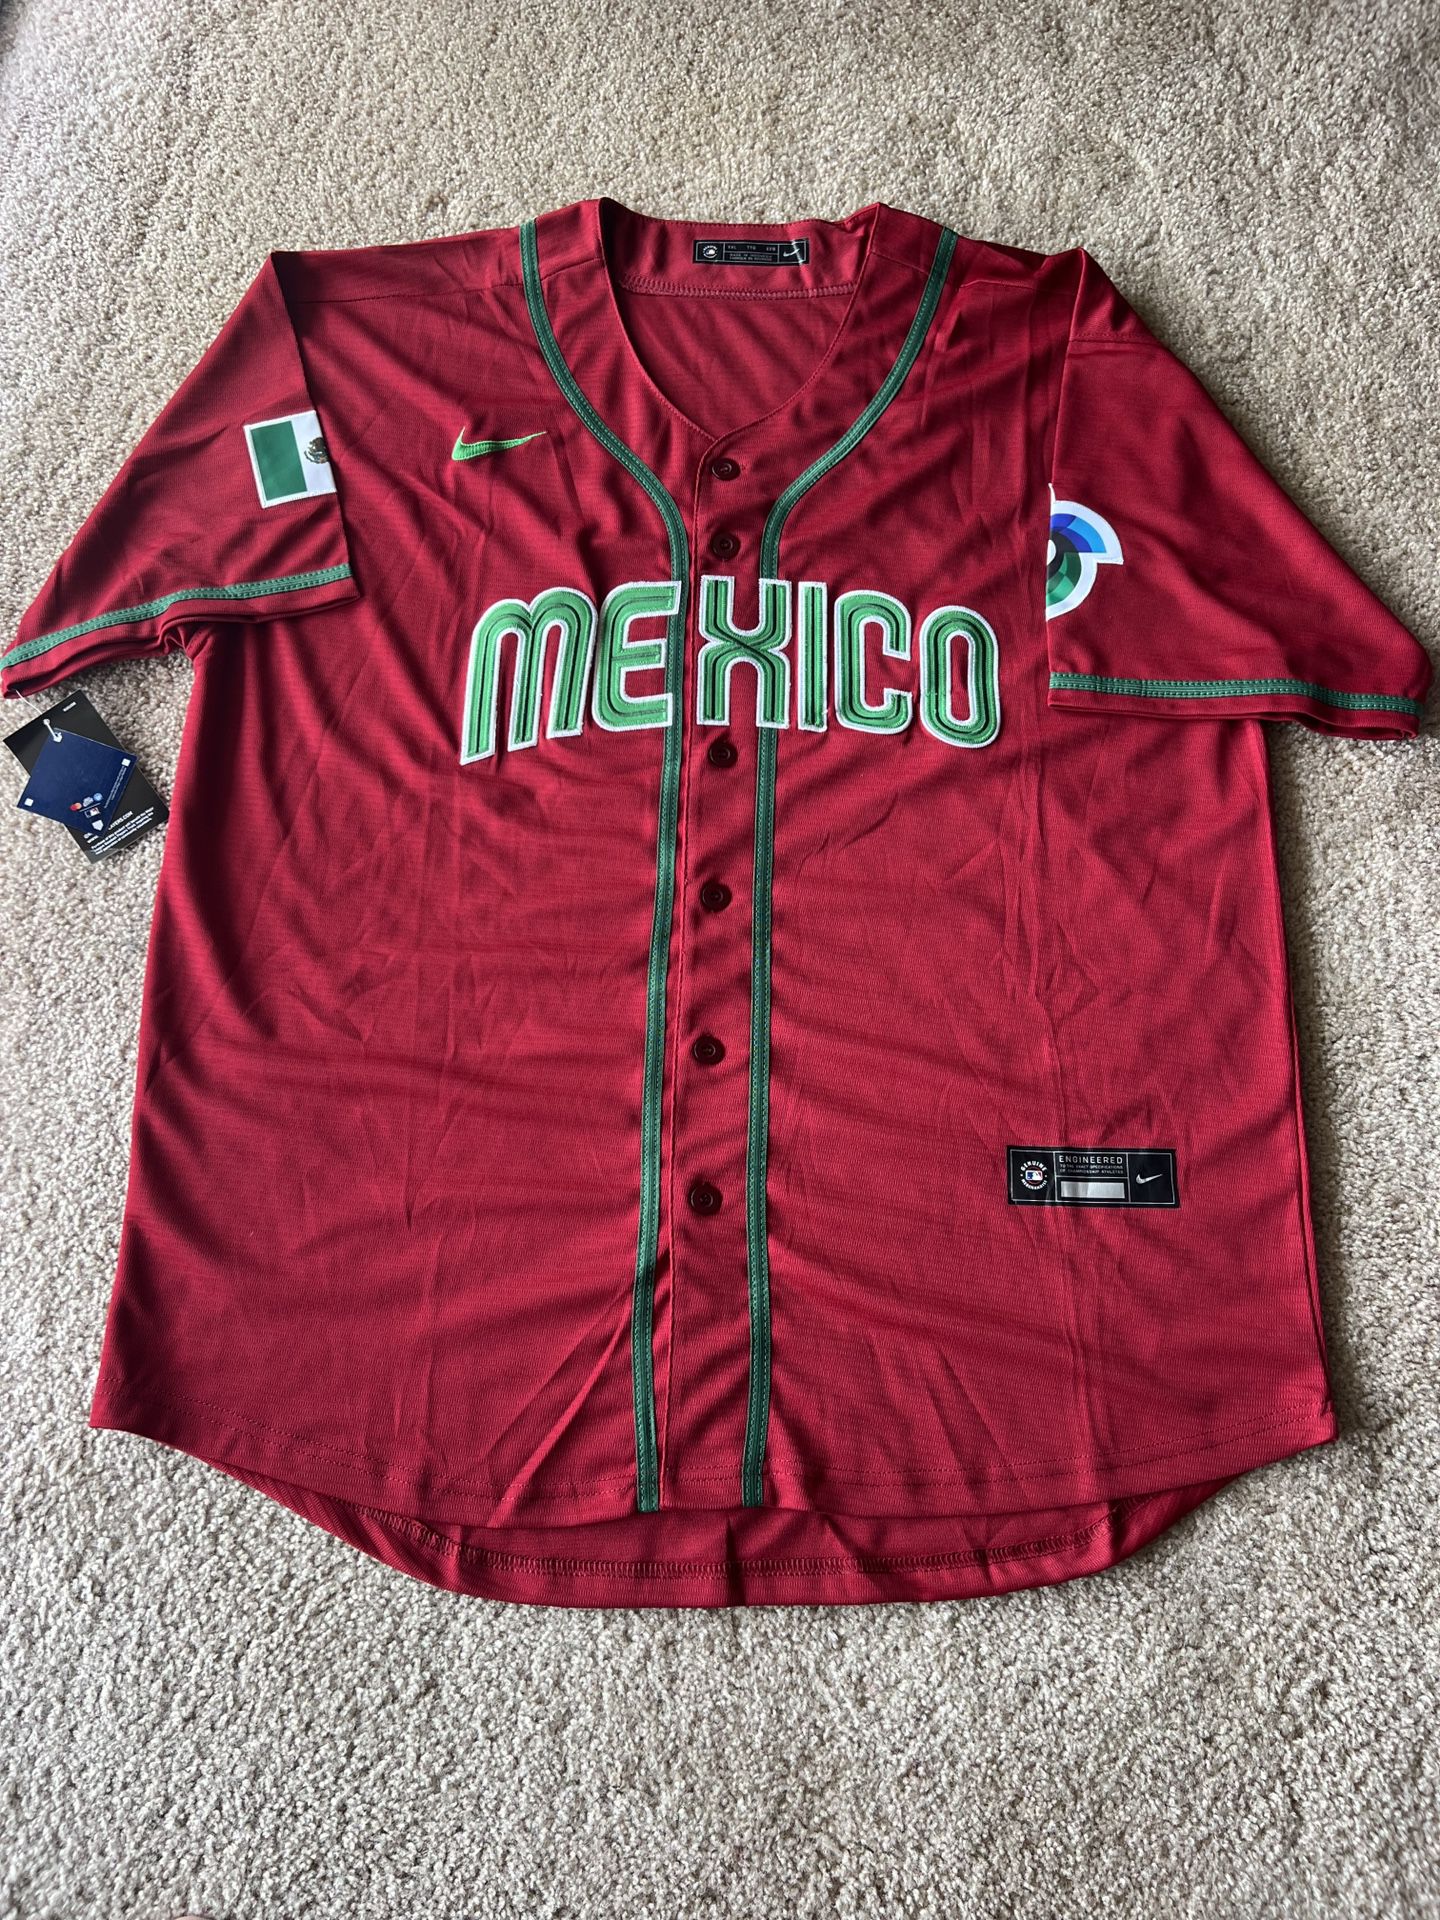 Mexico 🇲🇽 baseball jersey sizes M-S⚾️